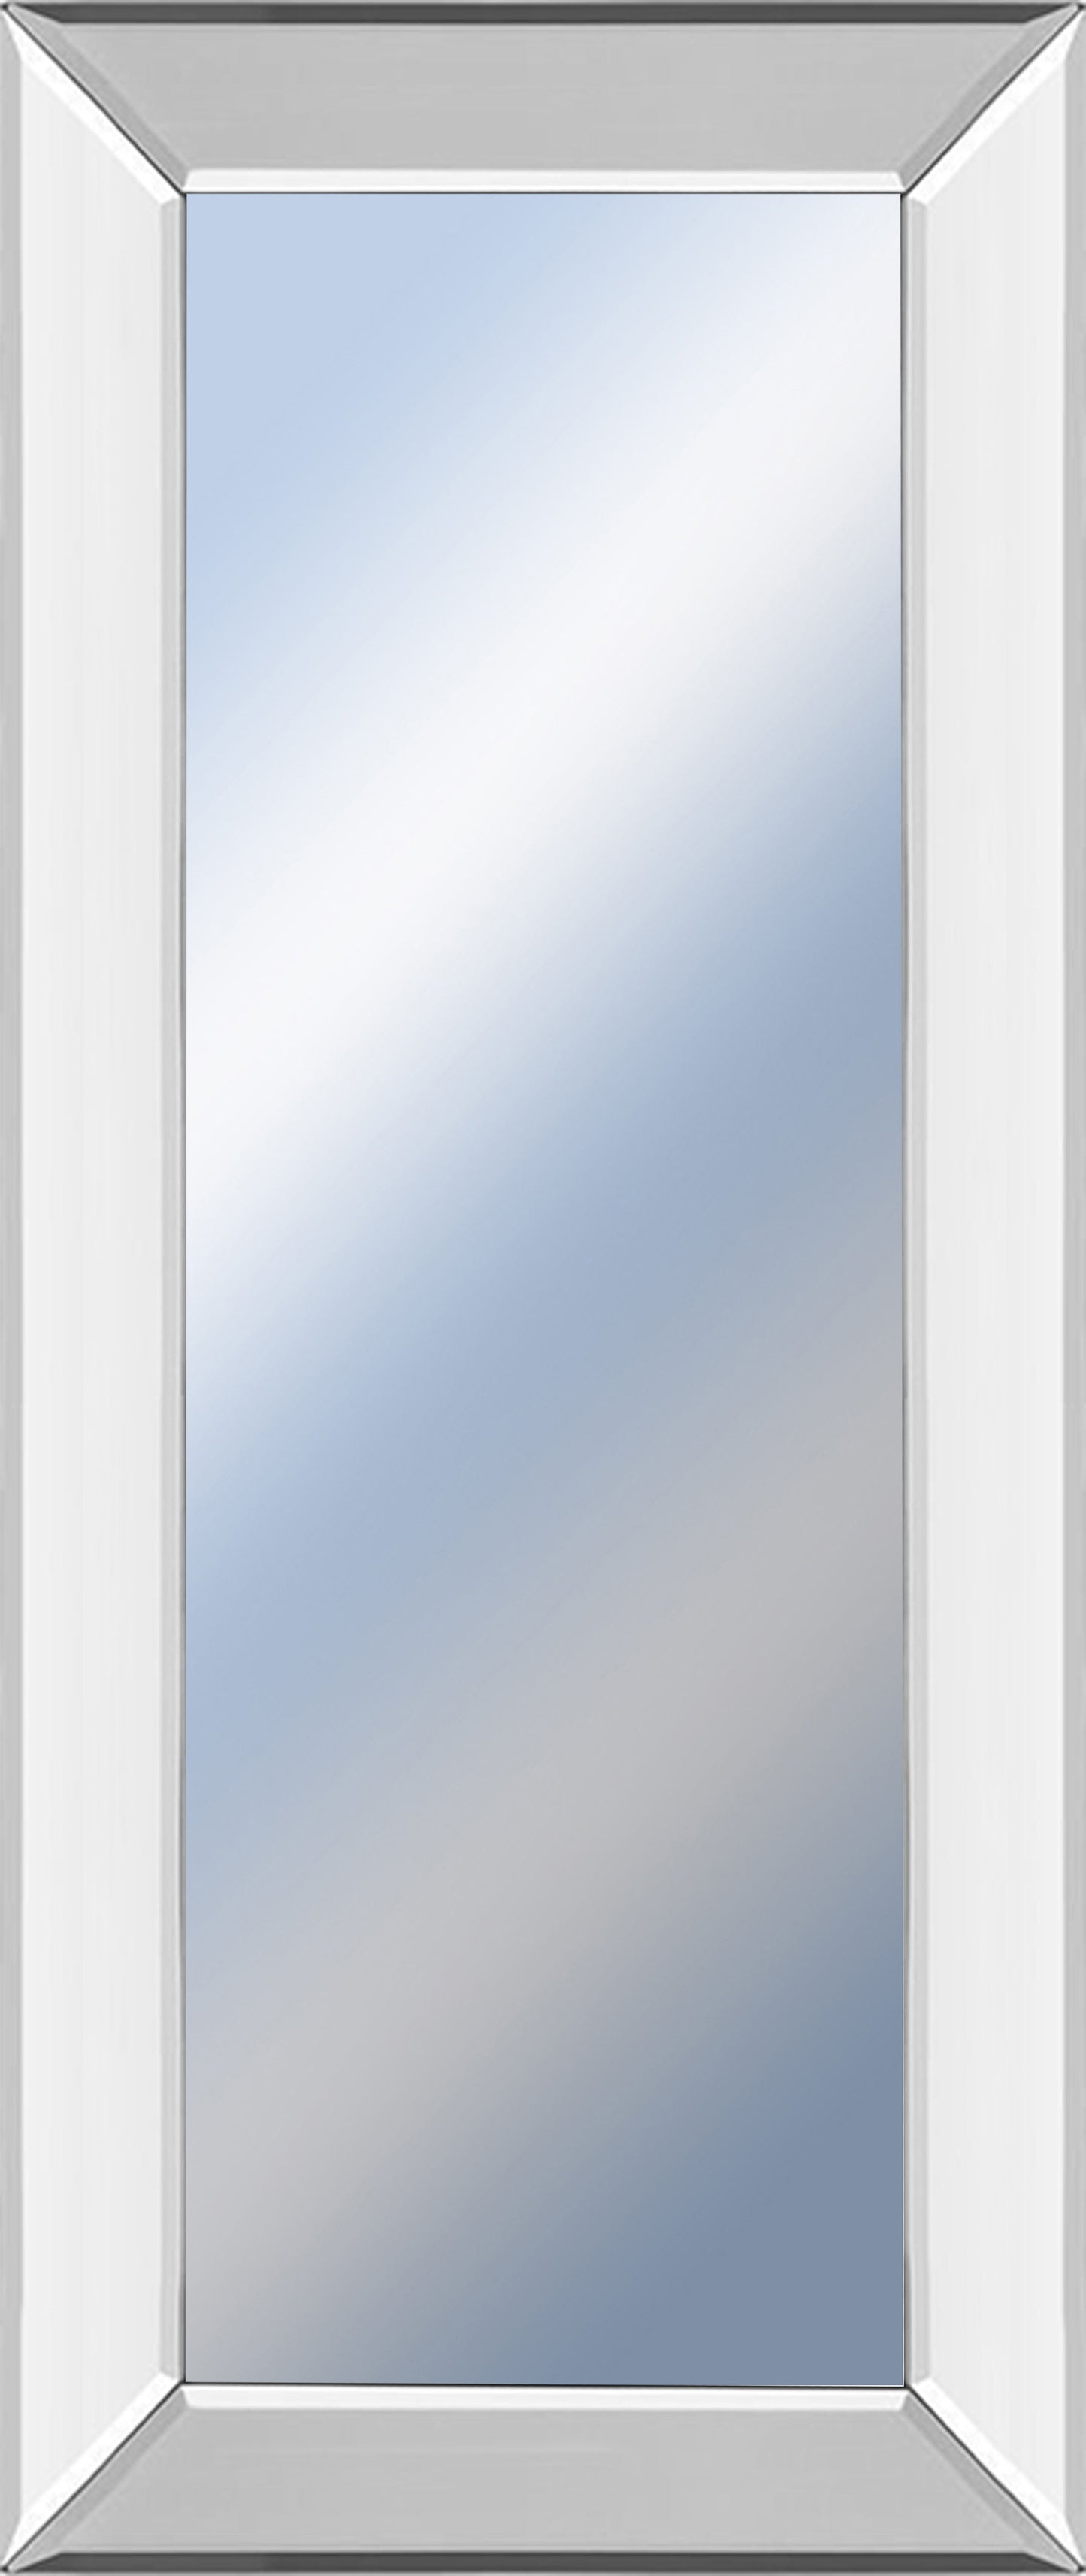 18x42 Decorative Framed Wall Mirror By Classy Art Mirror - White